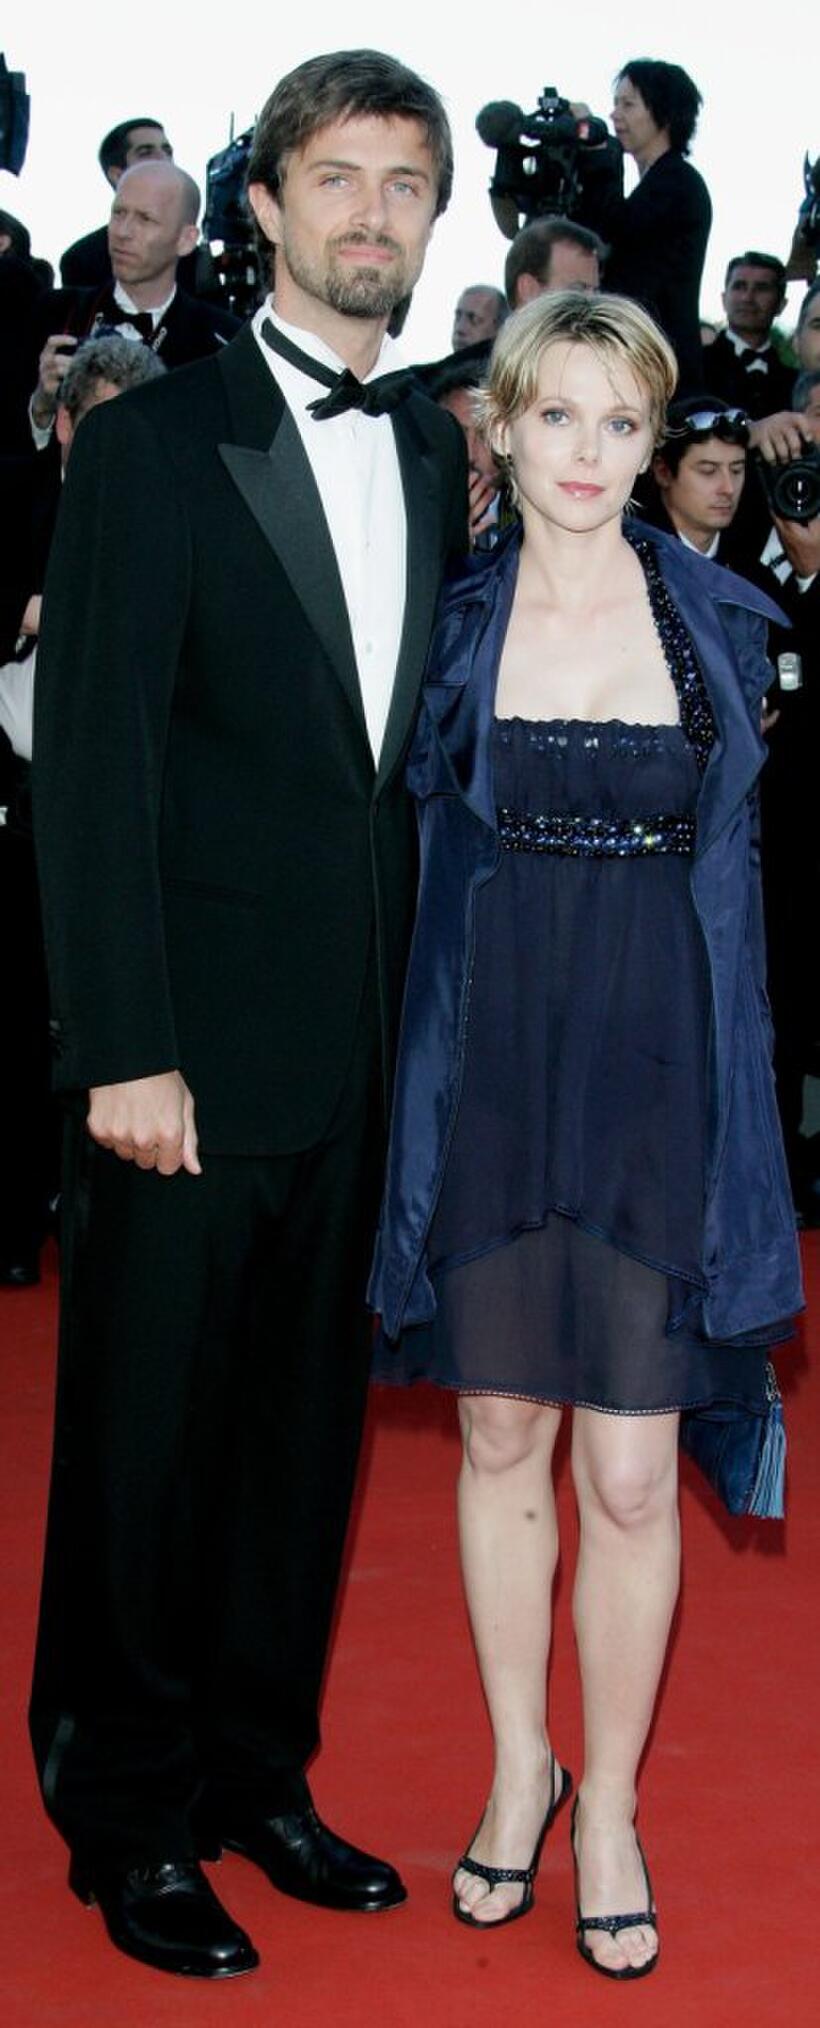 Kim Rossi Stuart and Barbora Bobulova at the premiere of "Volver" at Palais des Festivals during the 59th International Cannes Film Festival.